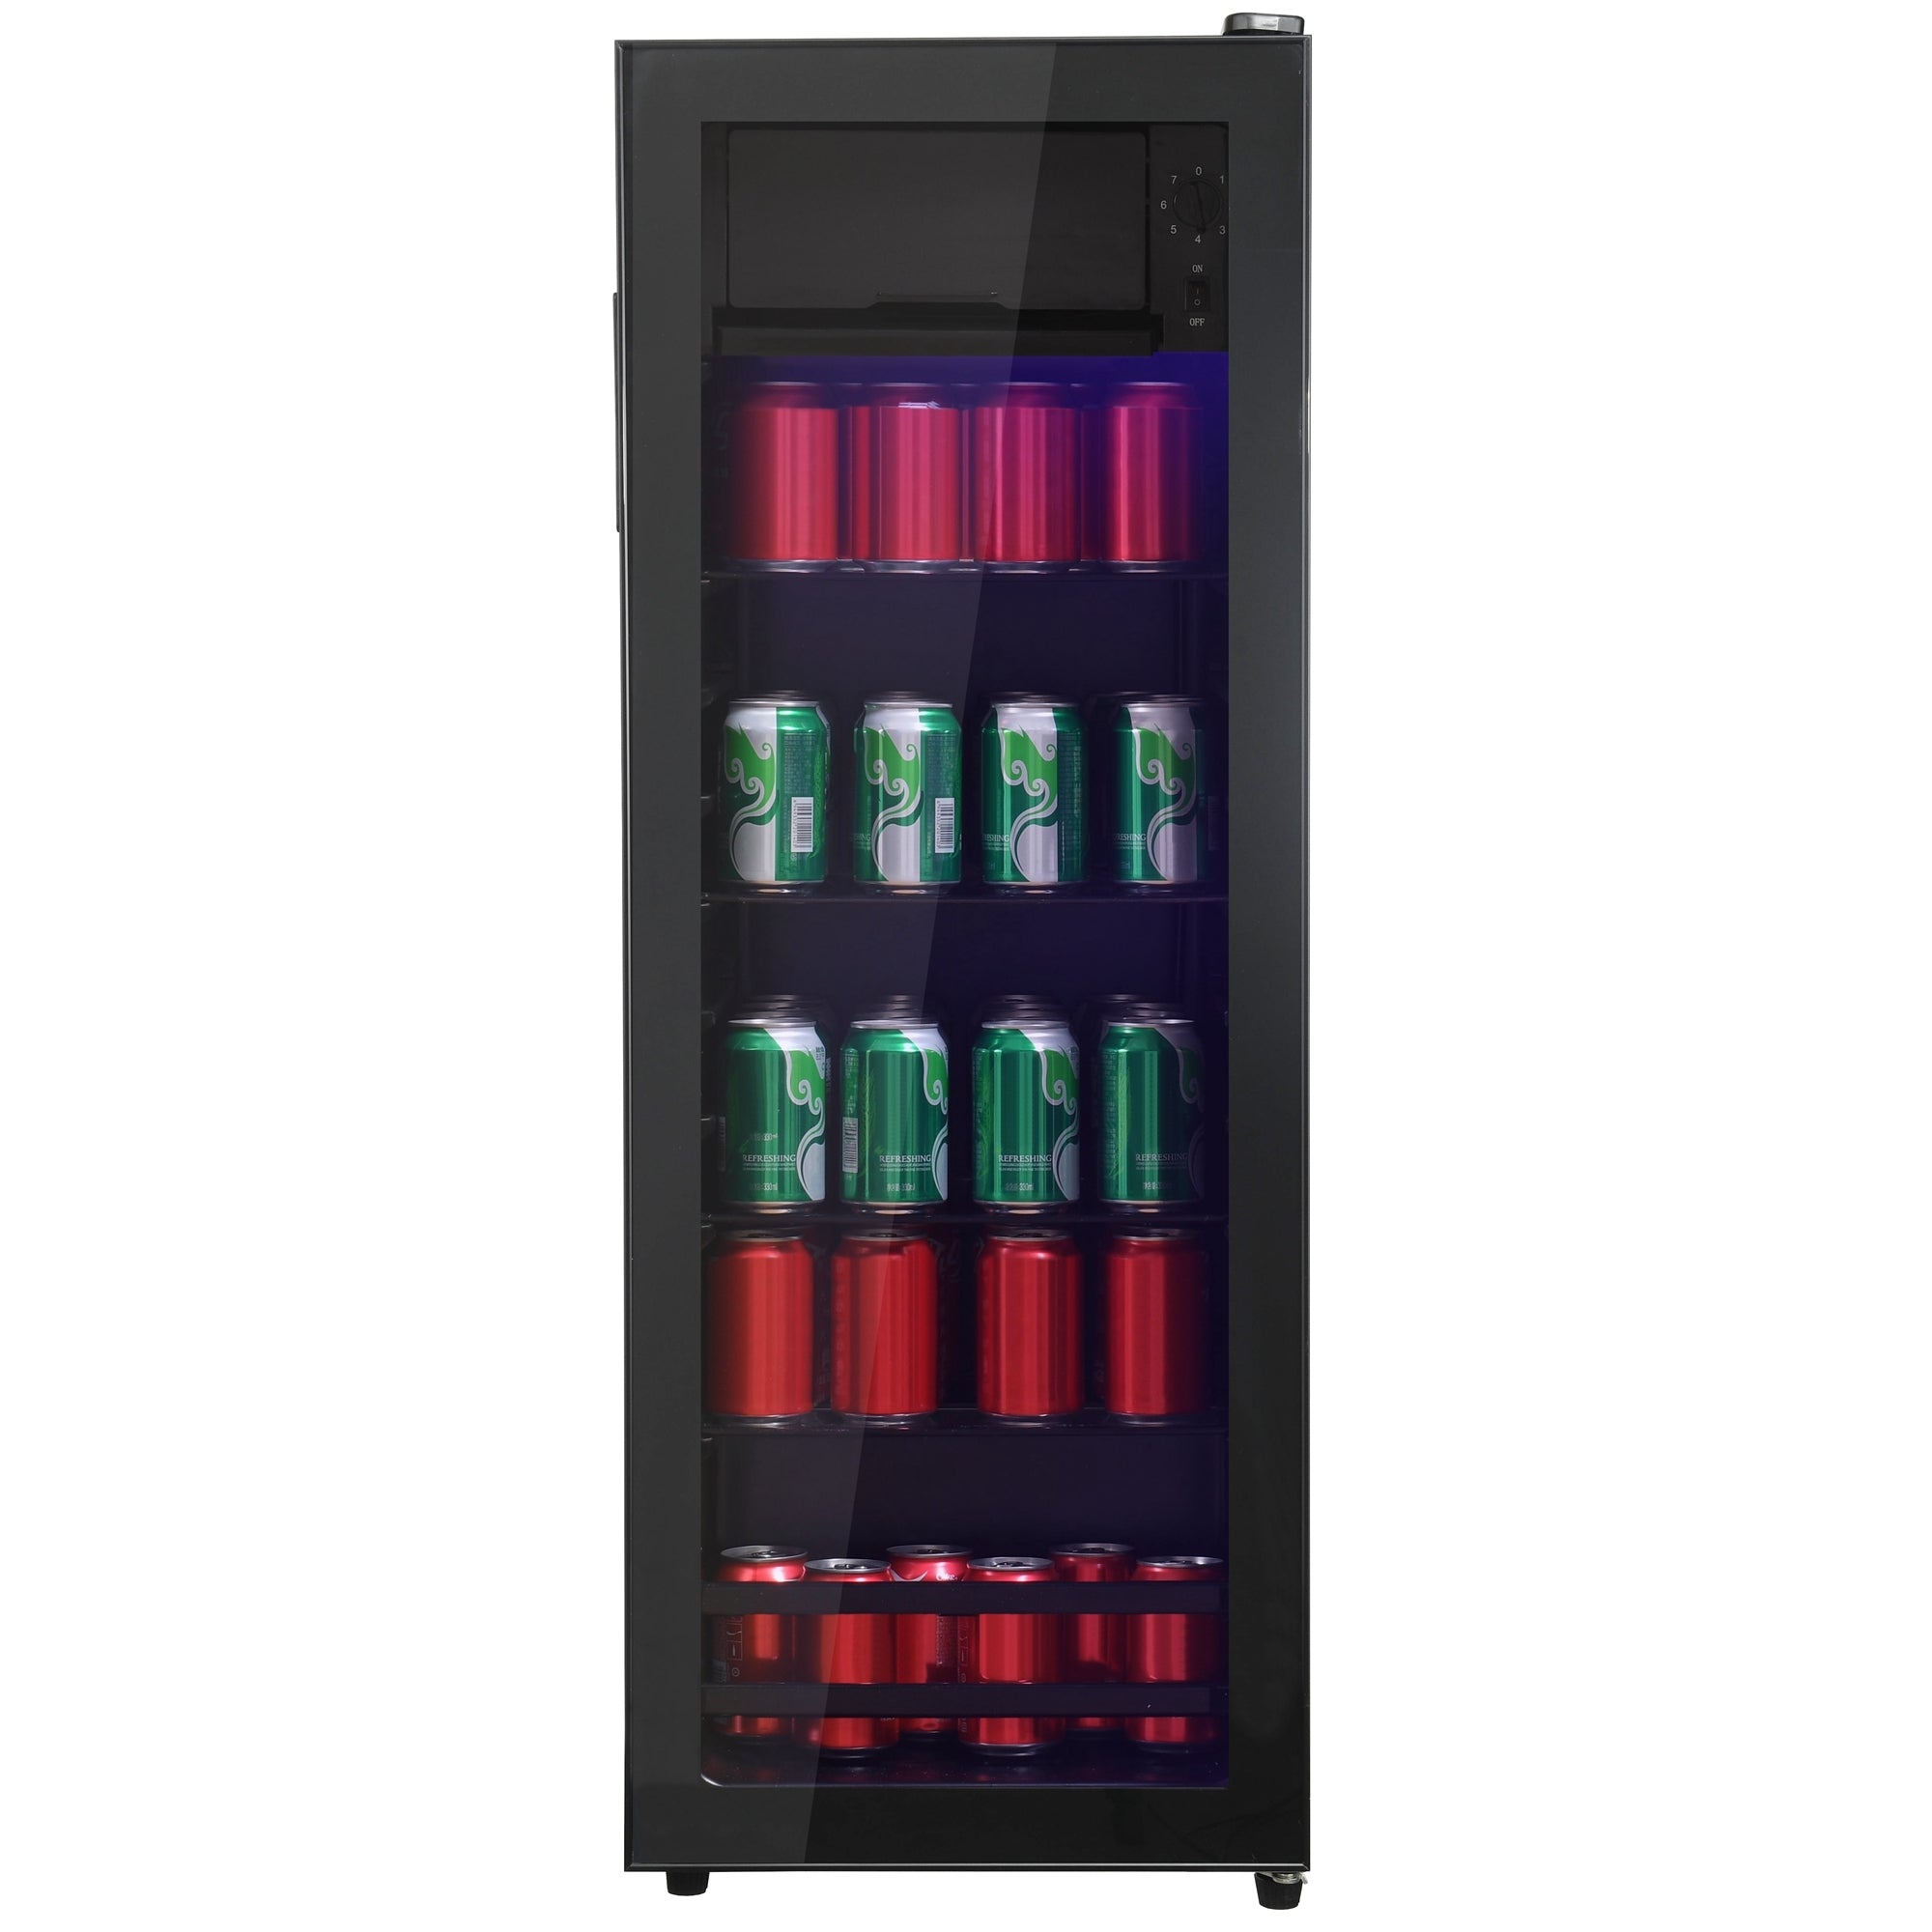 4.5Cu.ft mini fridge, 0.3Cu.ft freezer, up to 94 cans black-iron